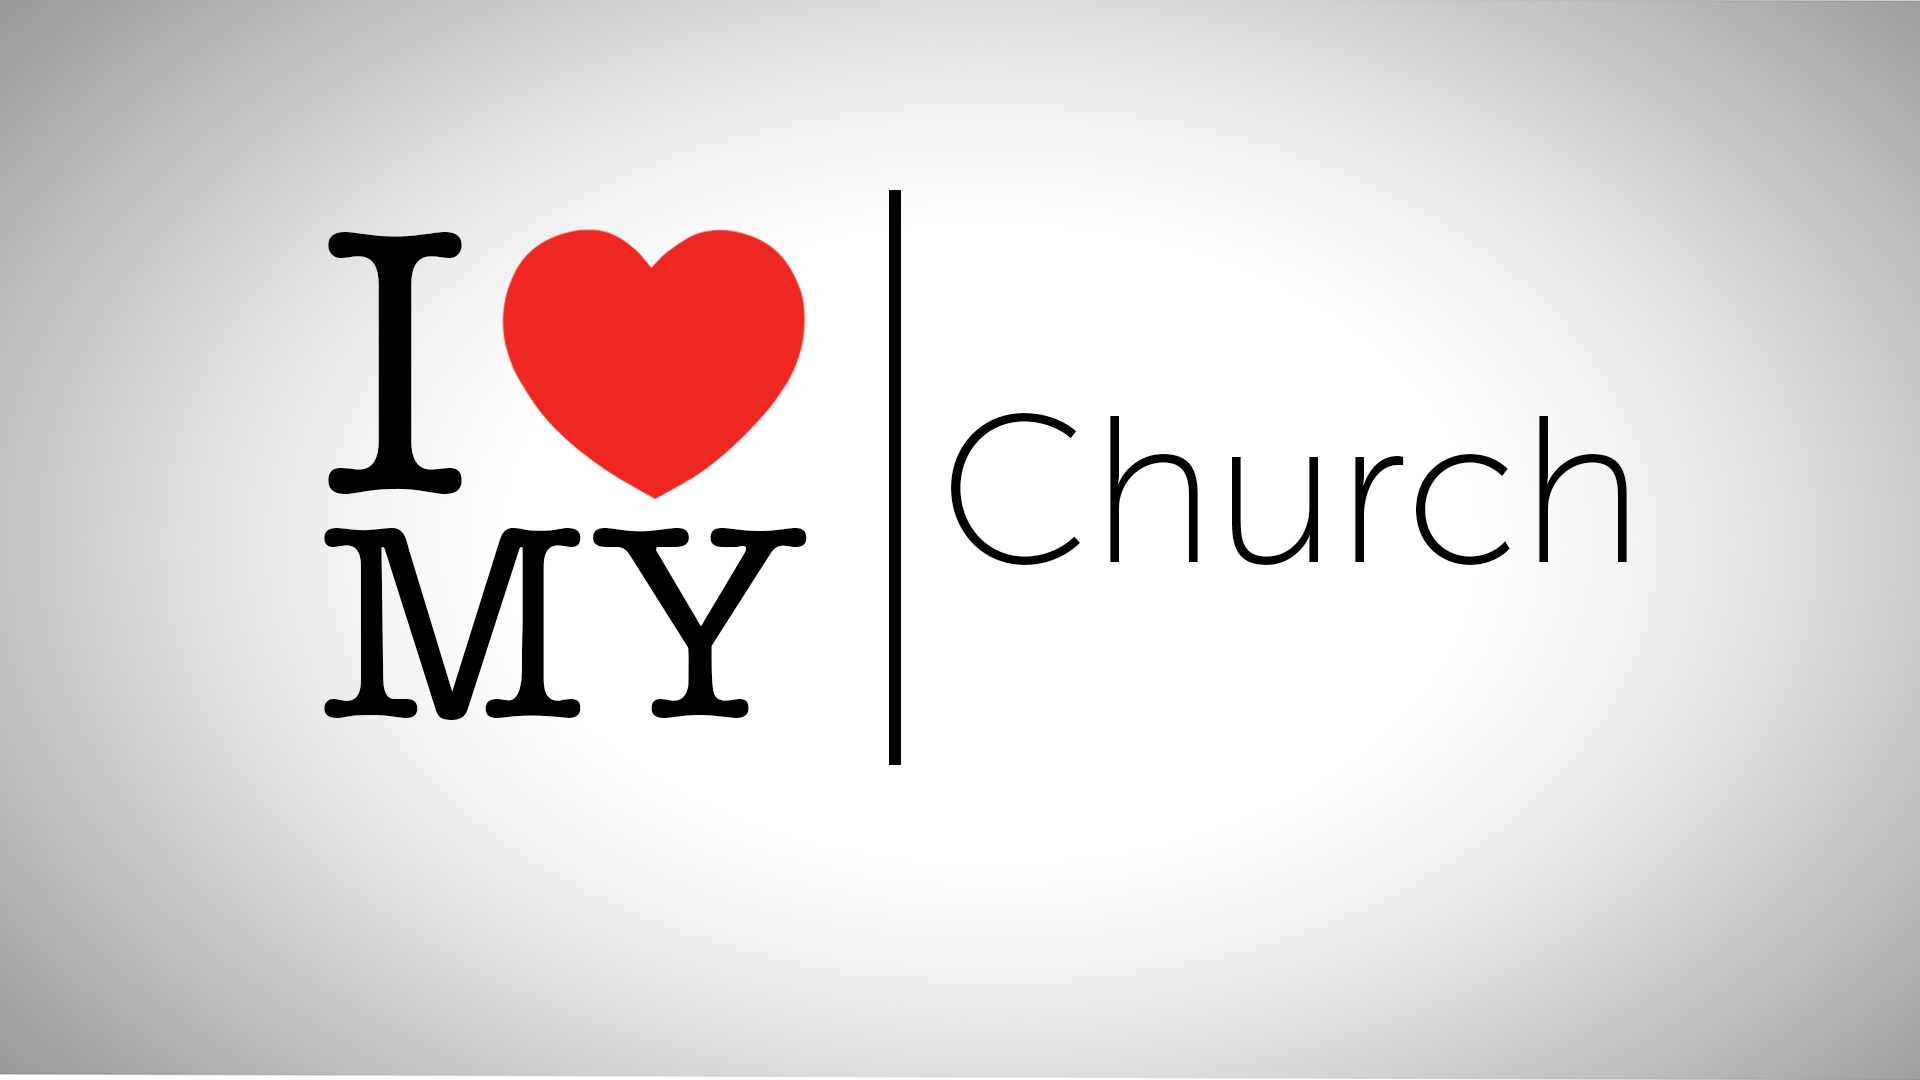 I love my church: I get Jesus